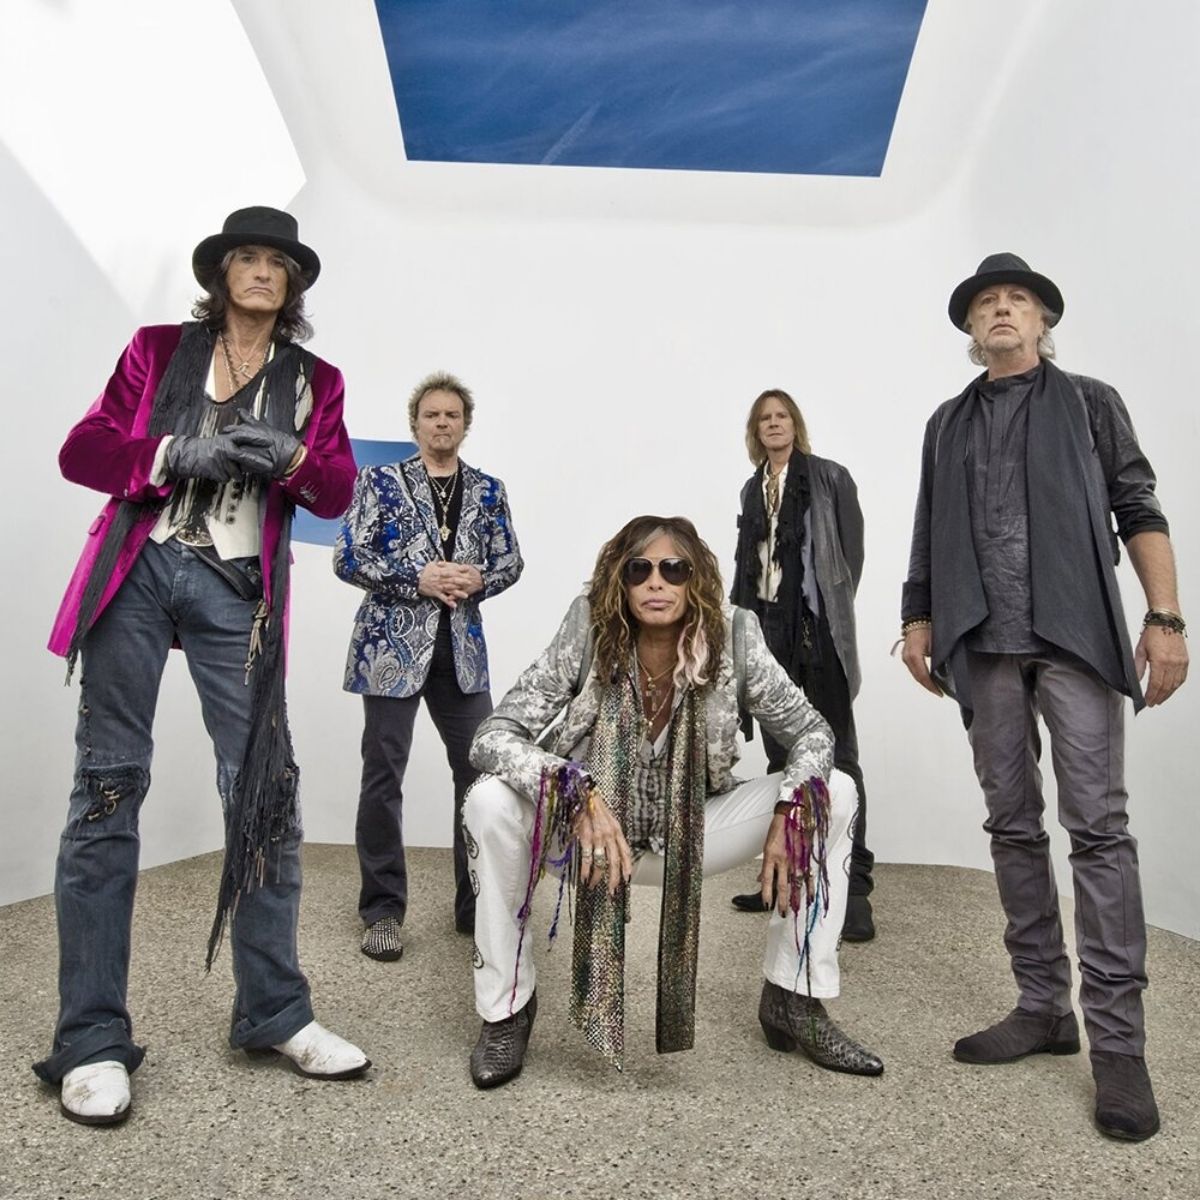 The full Aerosmith band